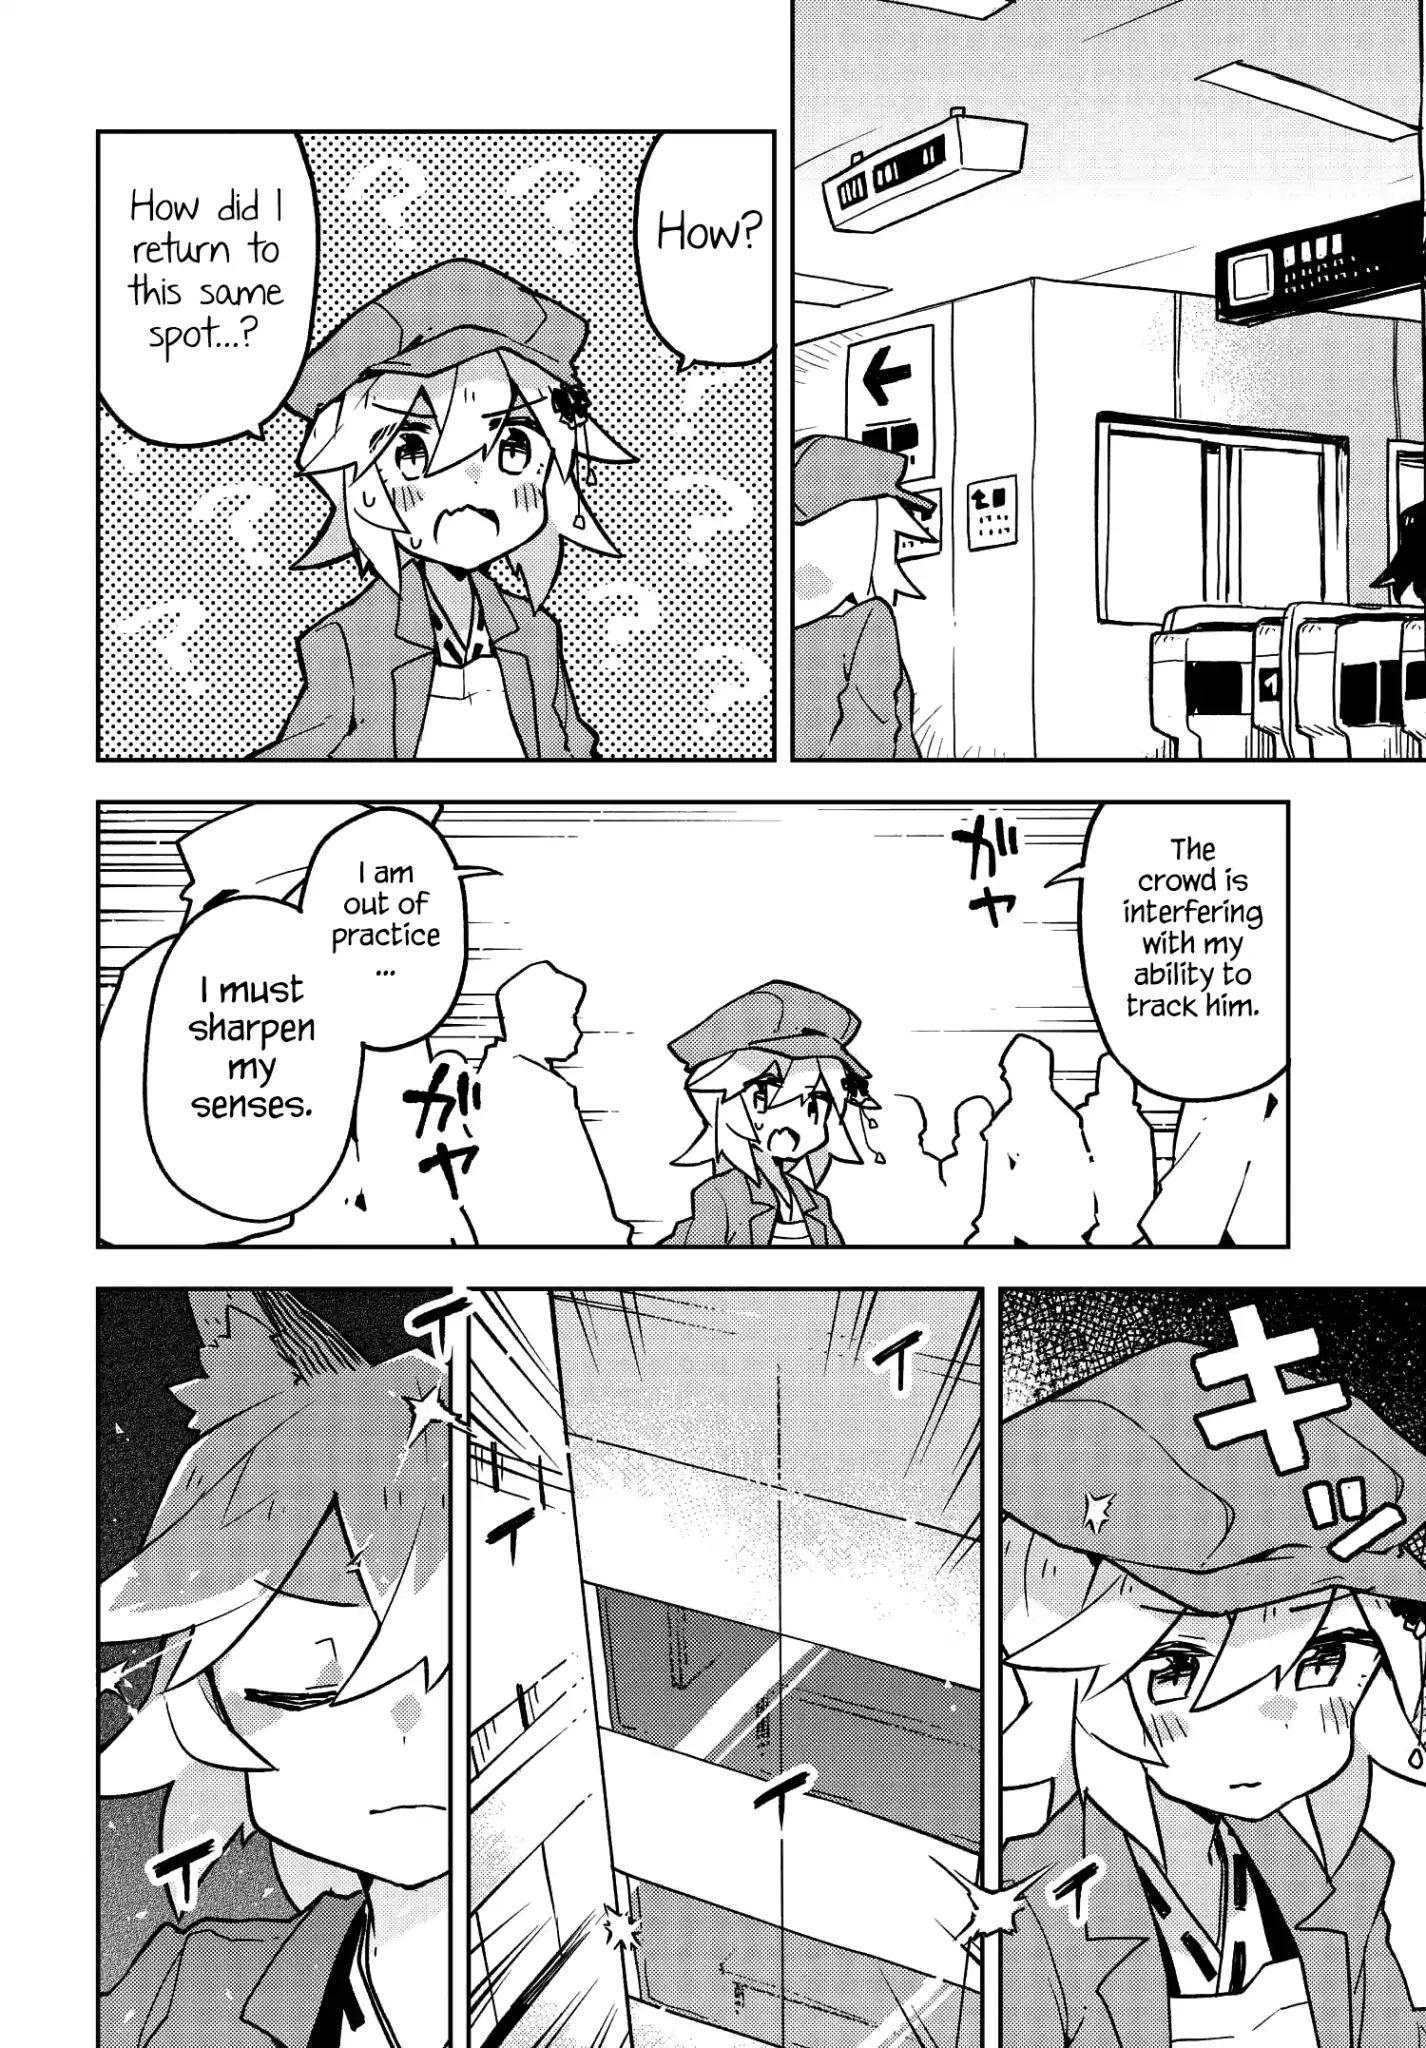 Sewayaki Kitsune No Senko-San Vol.3 Chapter 25 page 10 - Mangakakalot